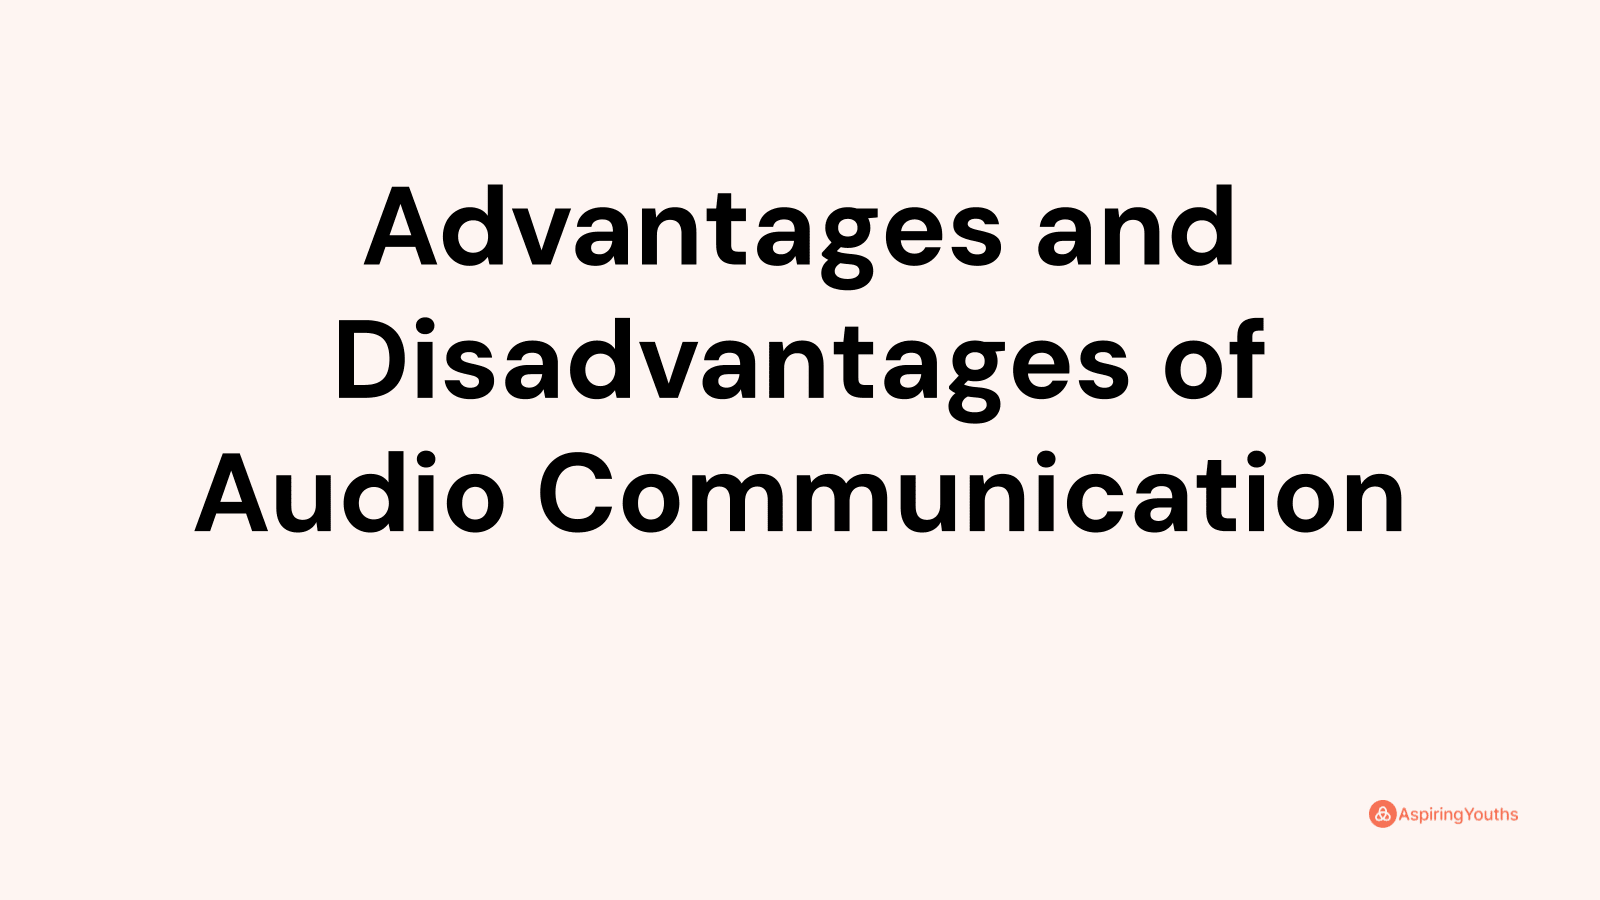 Advantages and disadvantages of Audio Communication